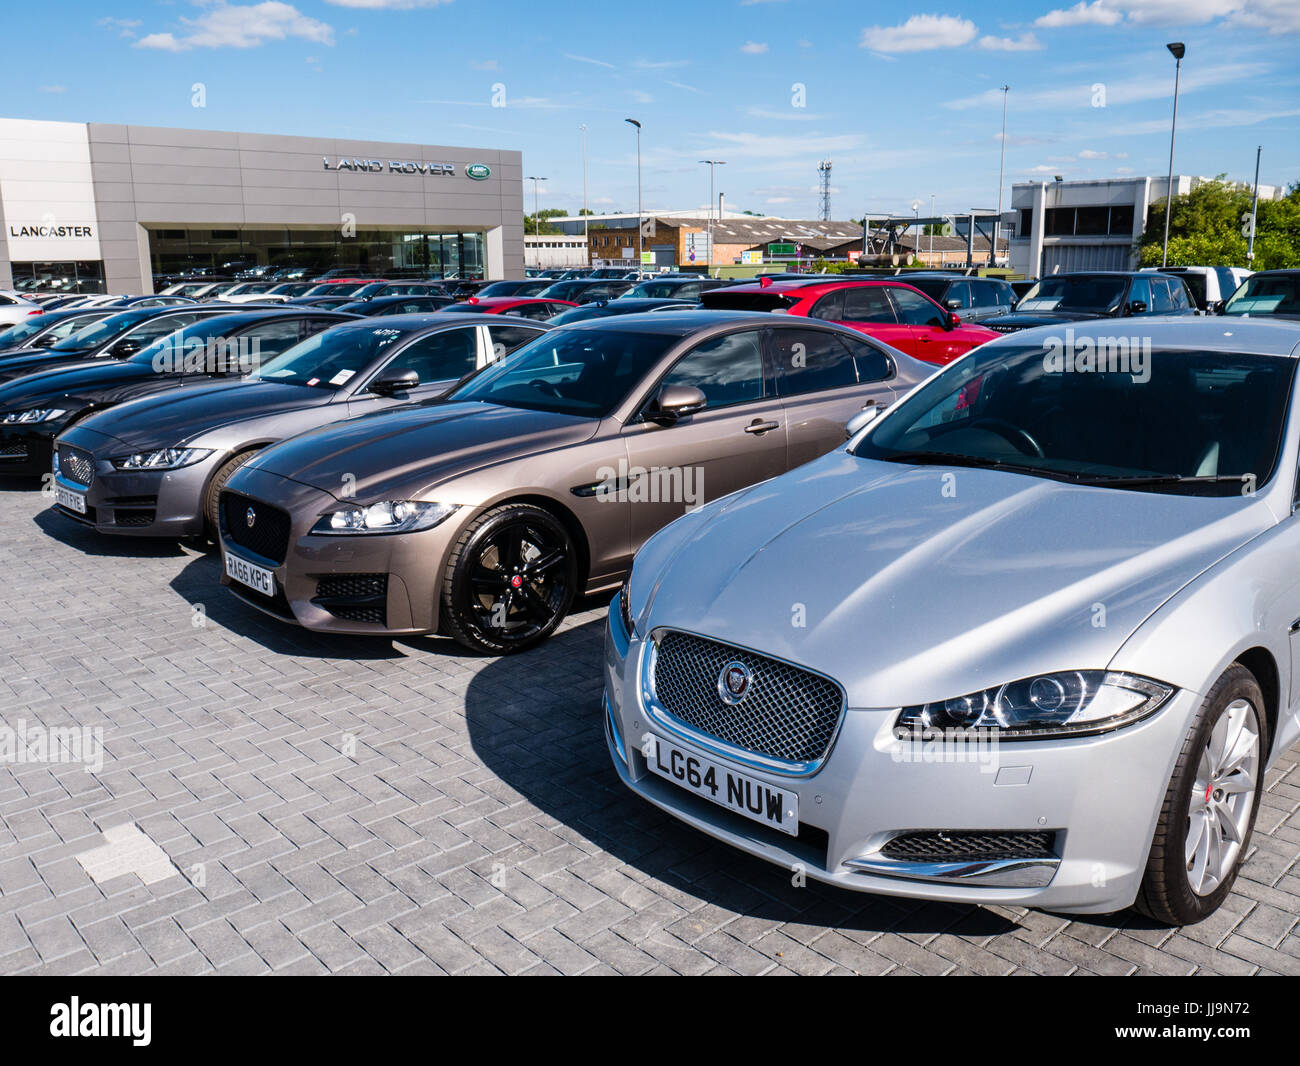 Lancaster, Jaguar, Rang rover Car Showroom, Reading, Berkshire, England, UK GB. Stock Photo